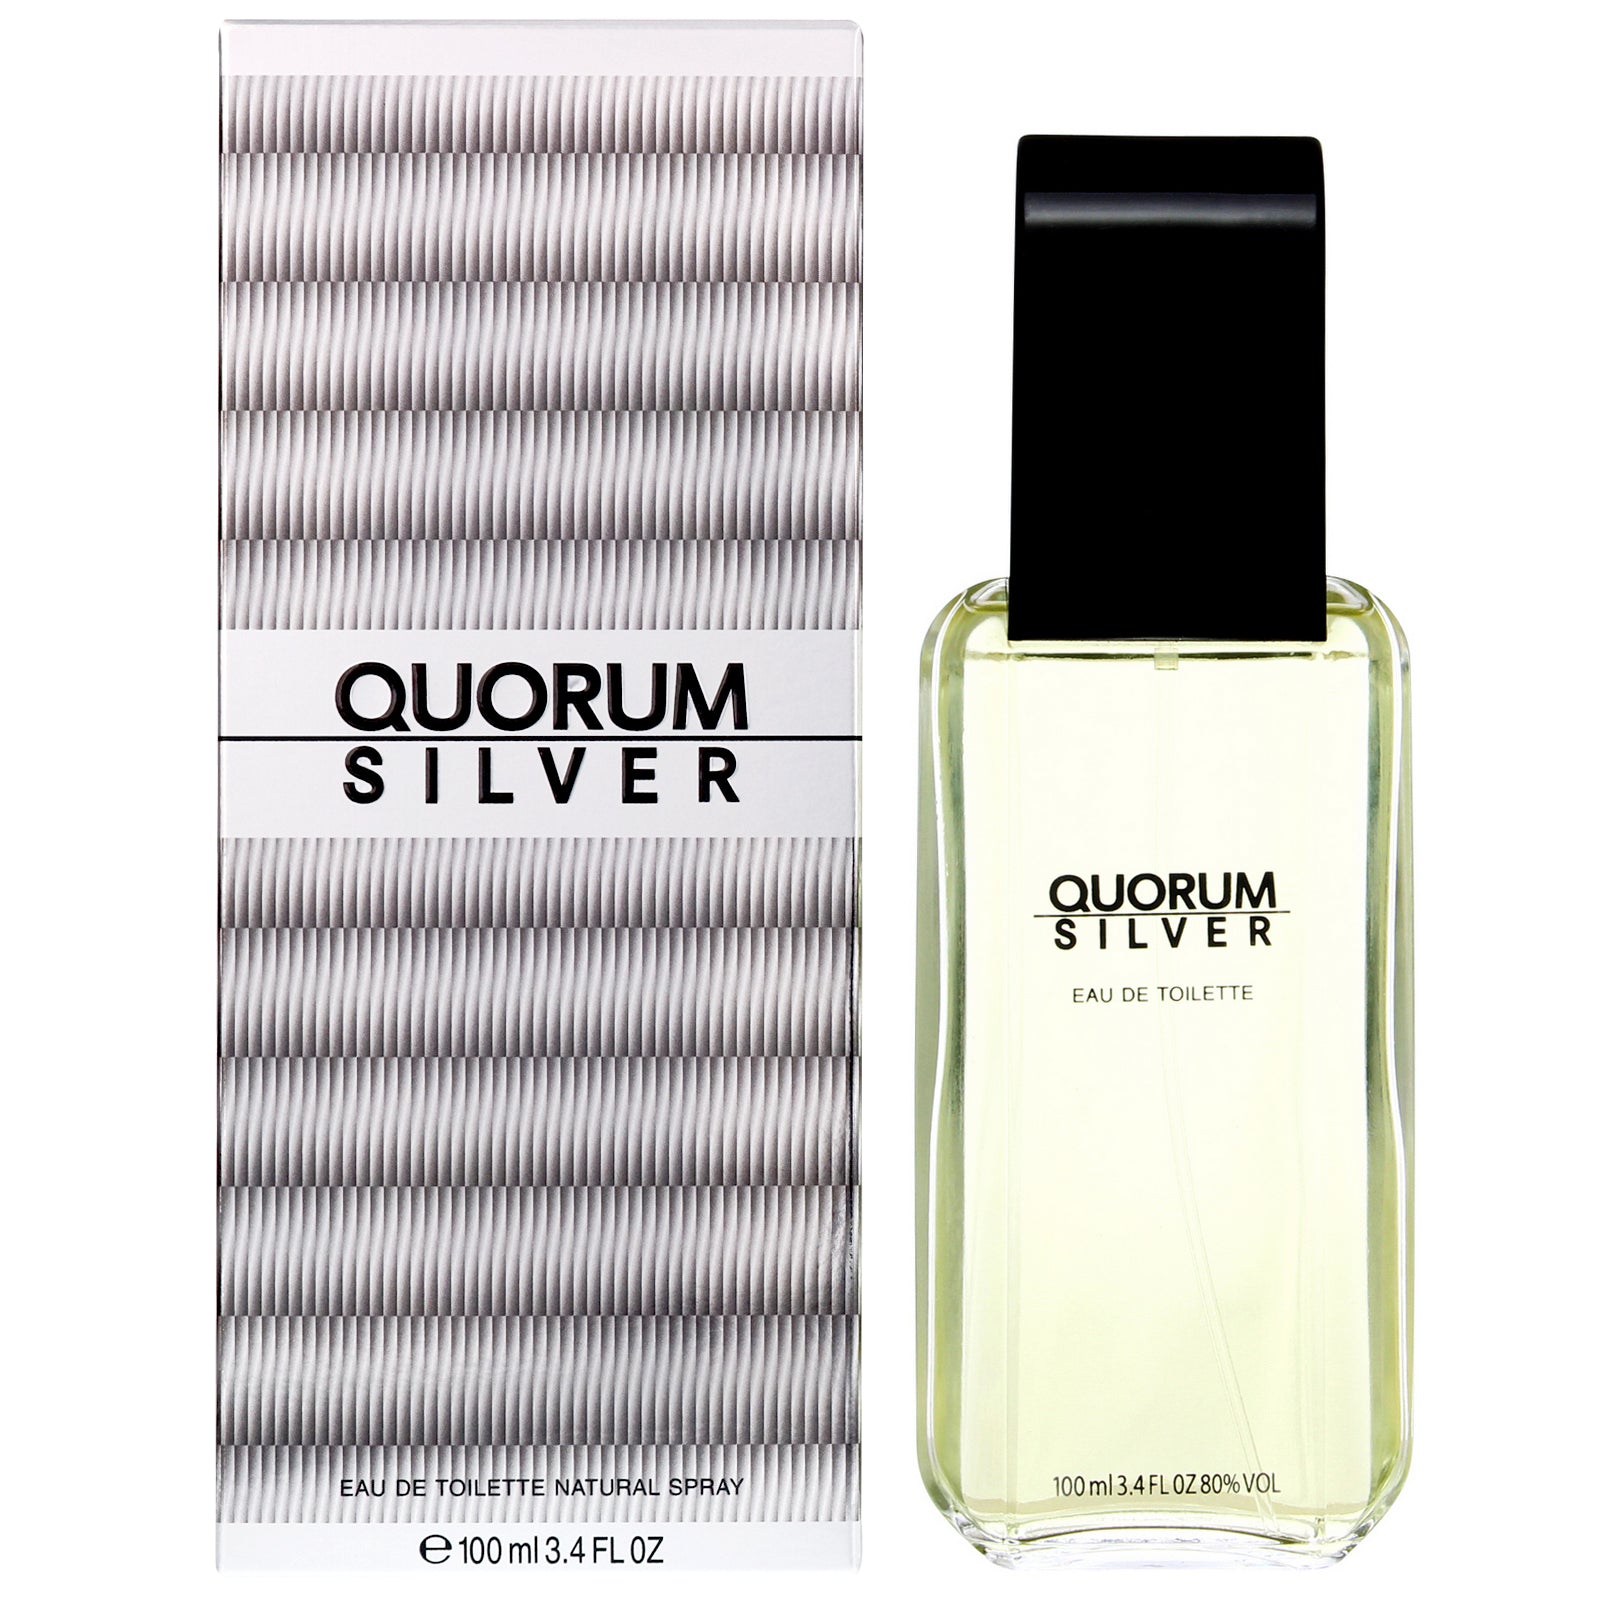 Quorum Silver 100ml EDT